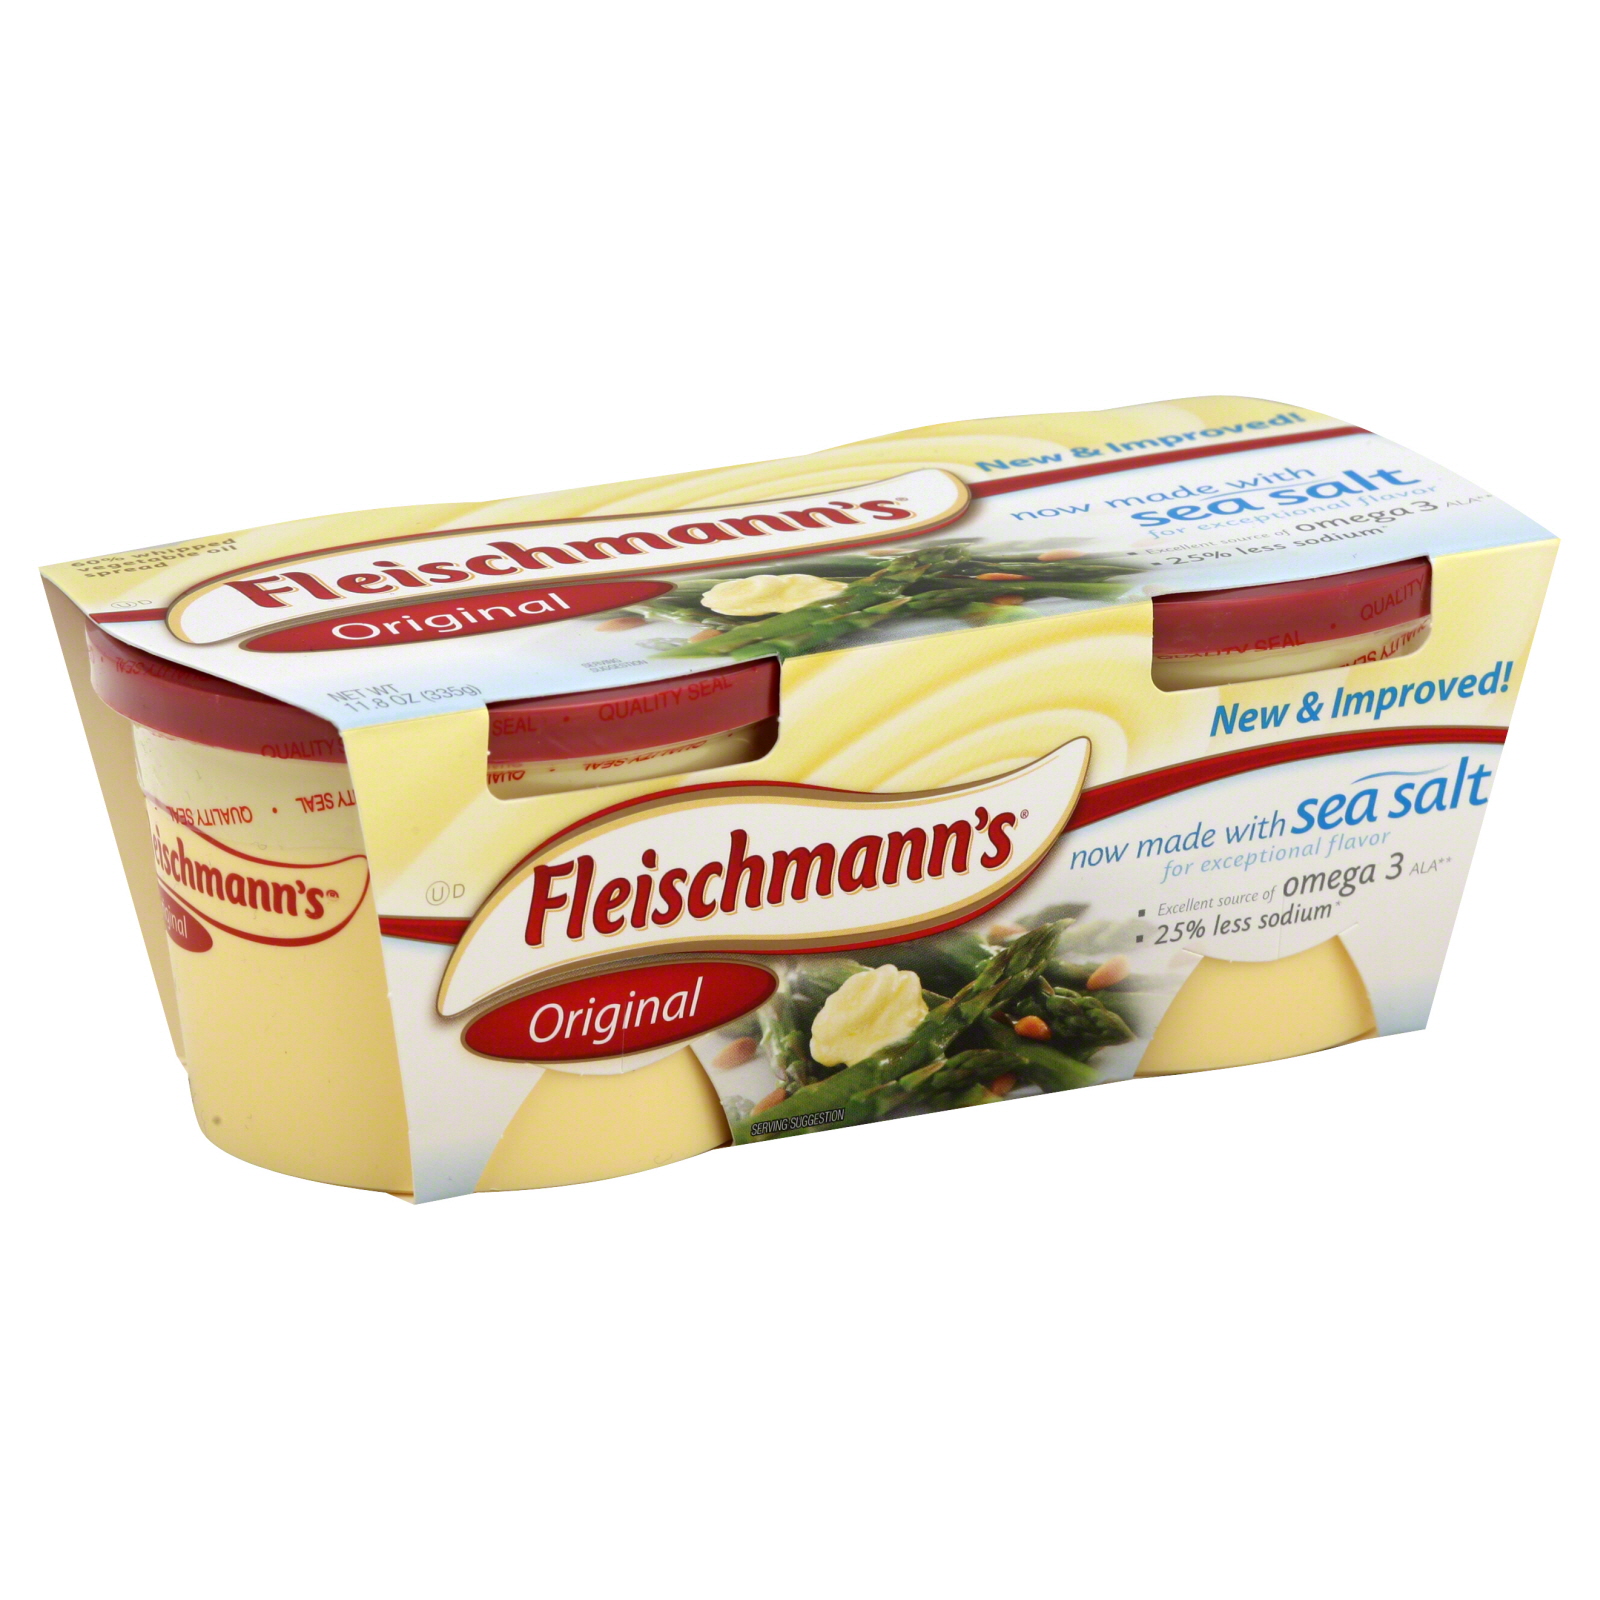 Fleischmann's Vegetable Oil Spread, 60%, Whipped, Original, 11.8 oz (335 g)